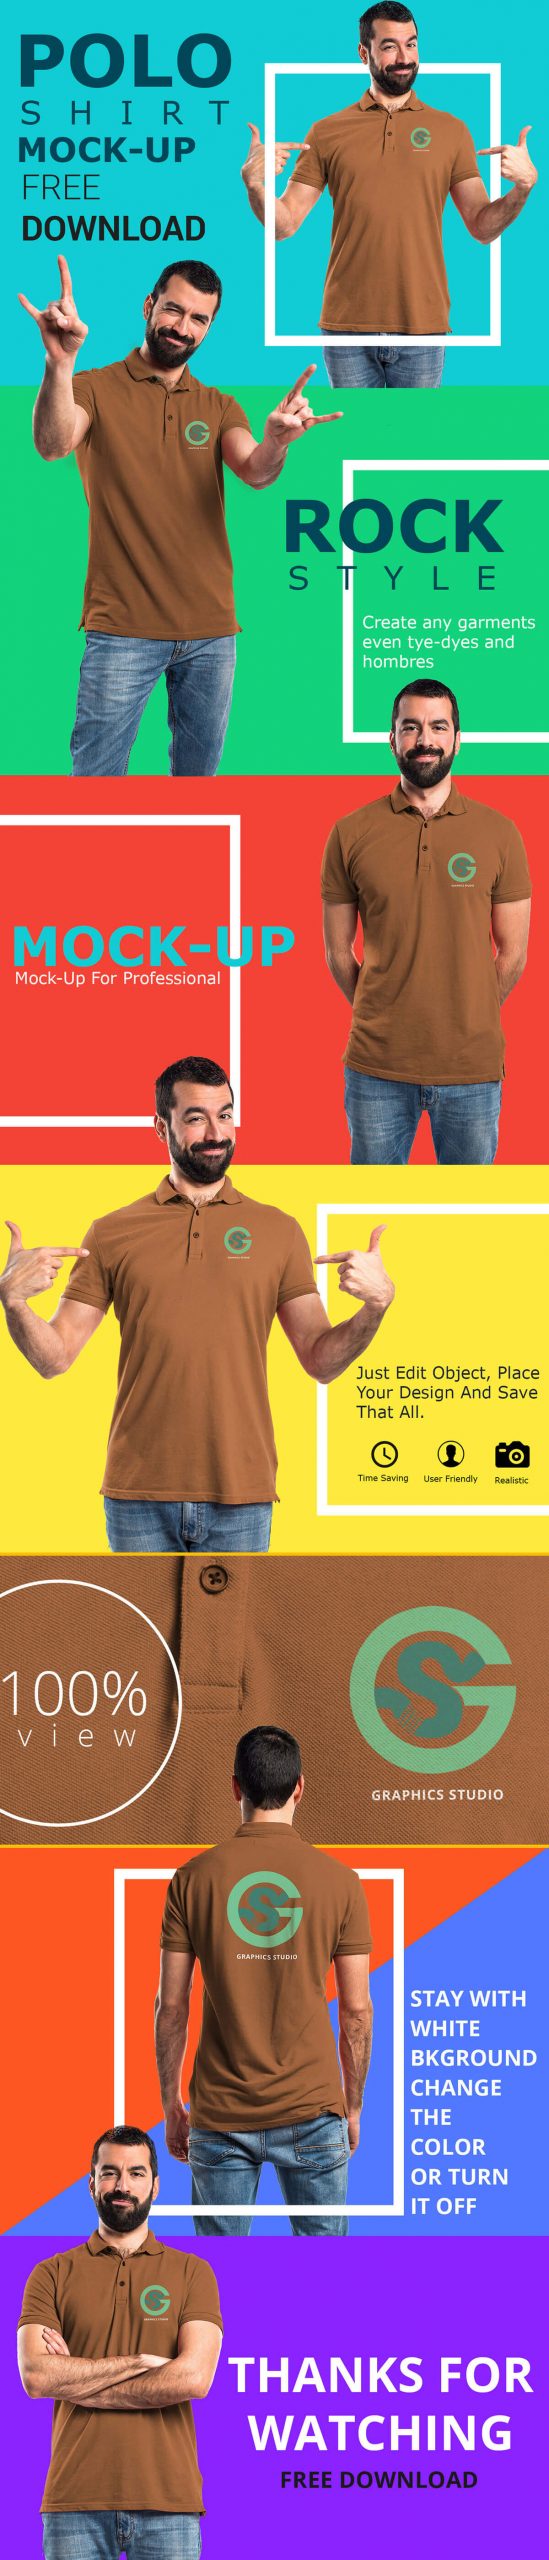 Polo Shirt Pack Mockup Free Download